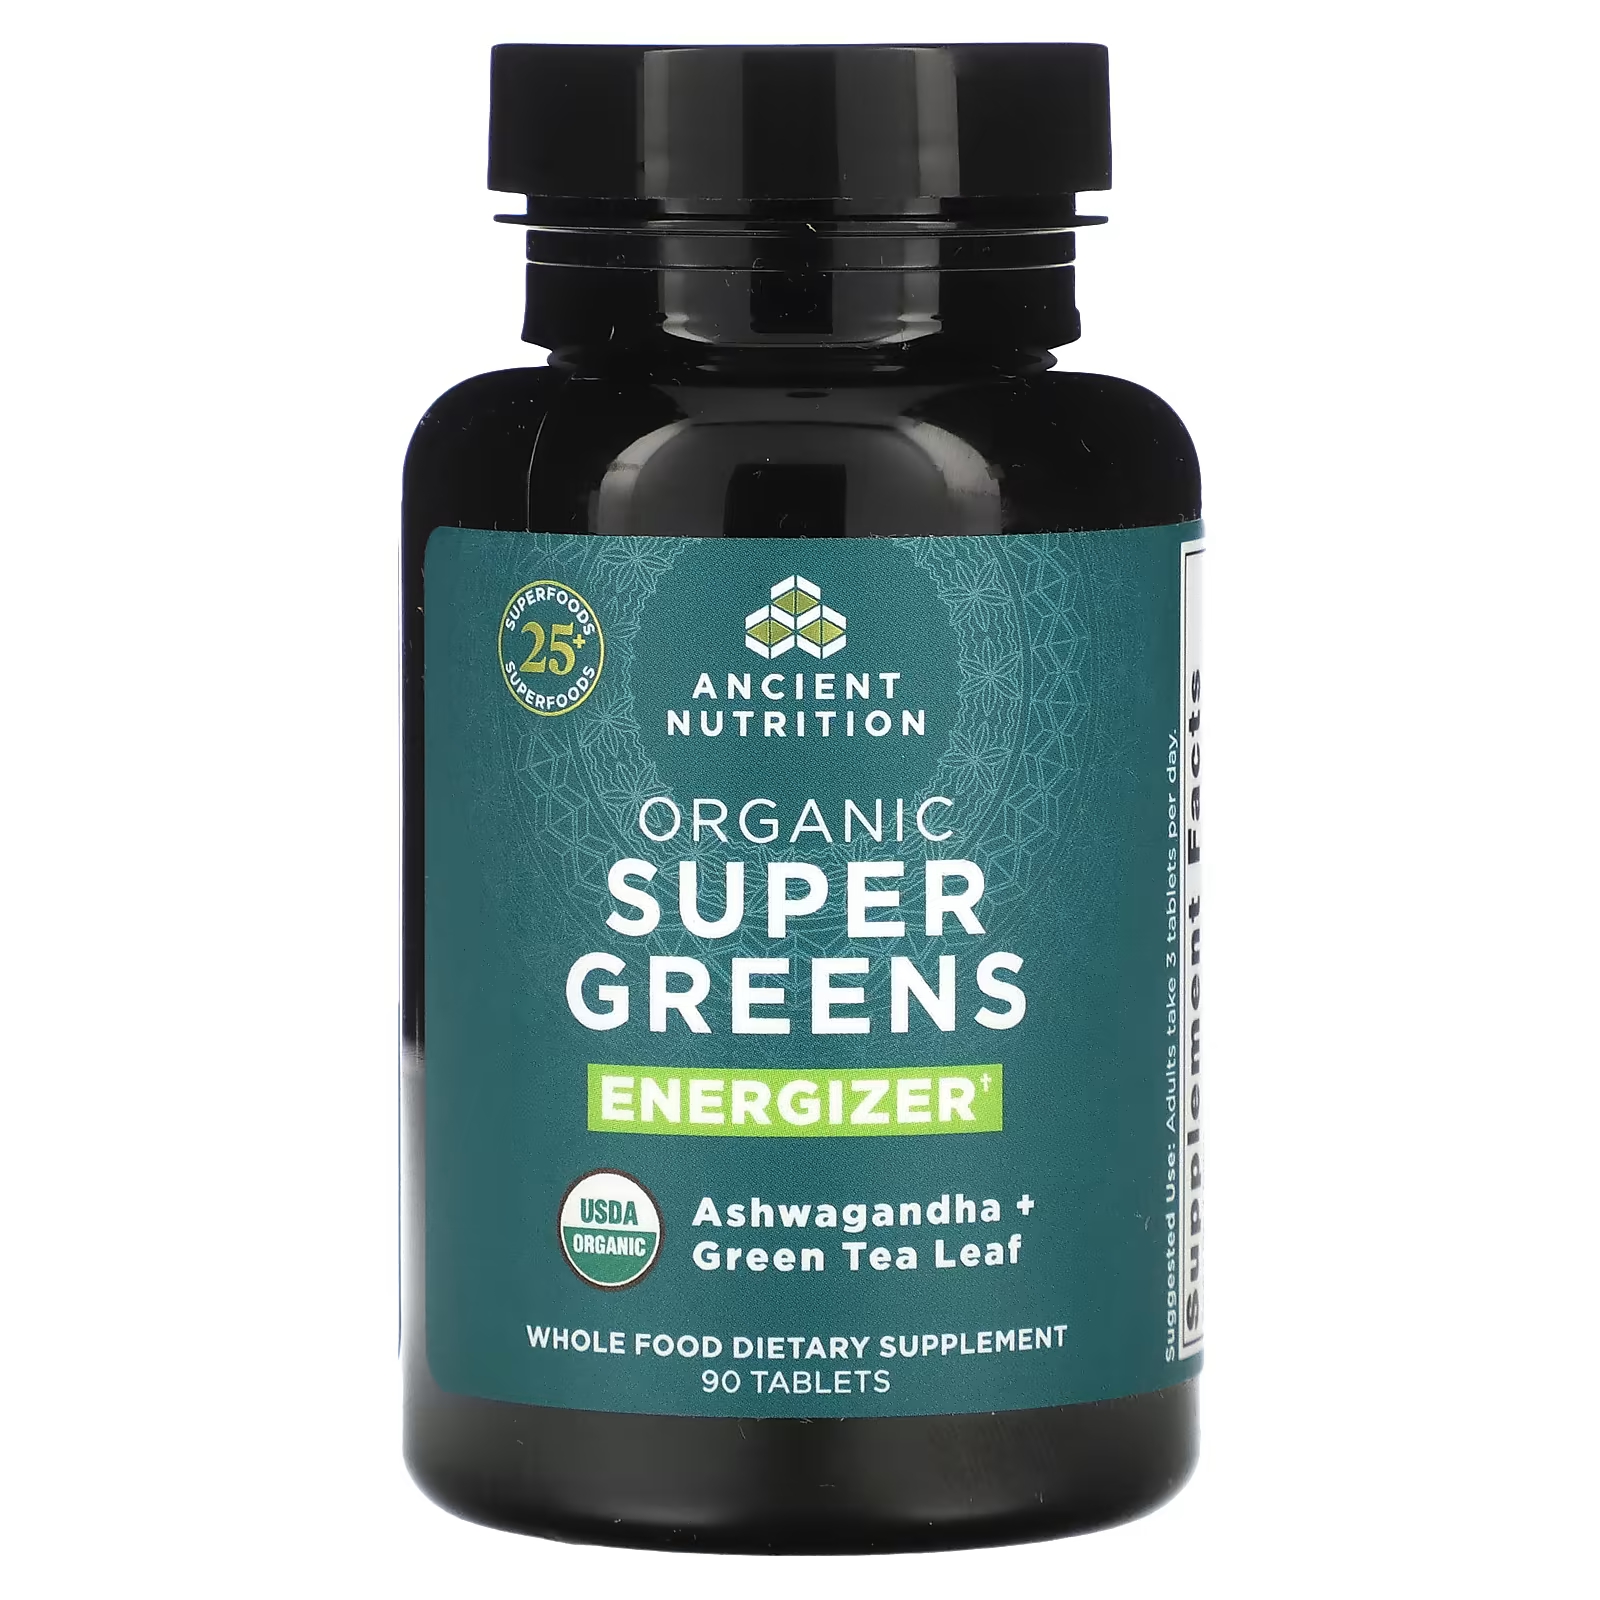 Ancient Nutrition Organic Super Greens Energizer, 90 таблеток цена и фото